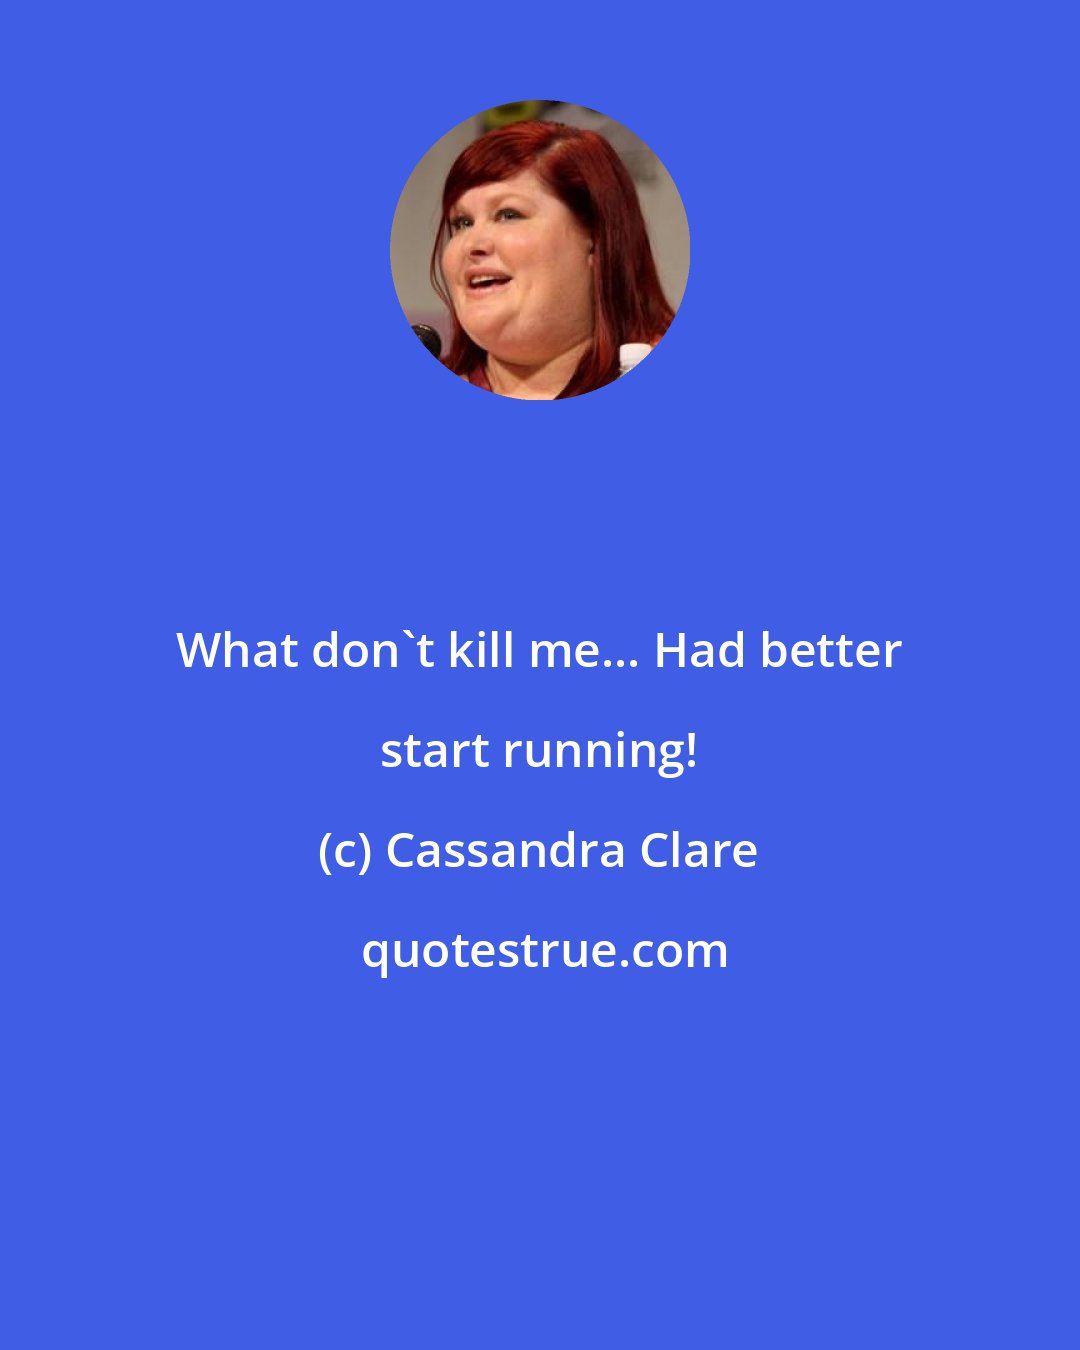 Cassandra Clare: What don't kill me... Had better start running!